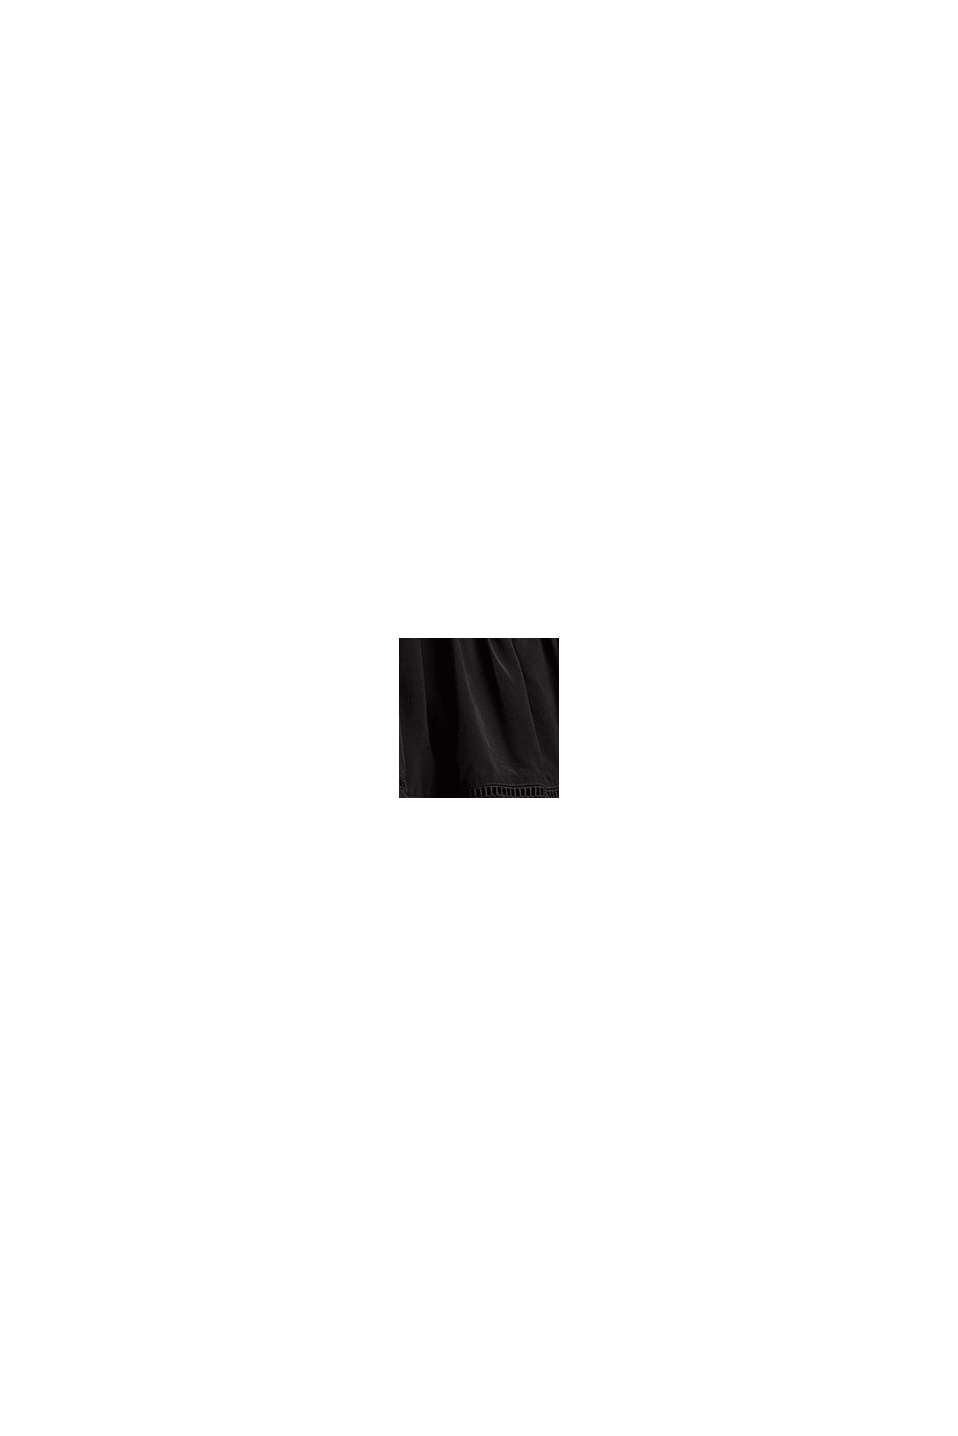 Krótka spódnica z falbanami, LENZING™ ECOVERO™, BLACK, swatch